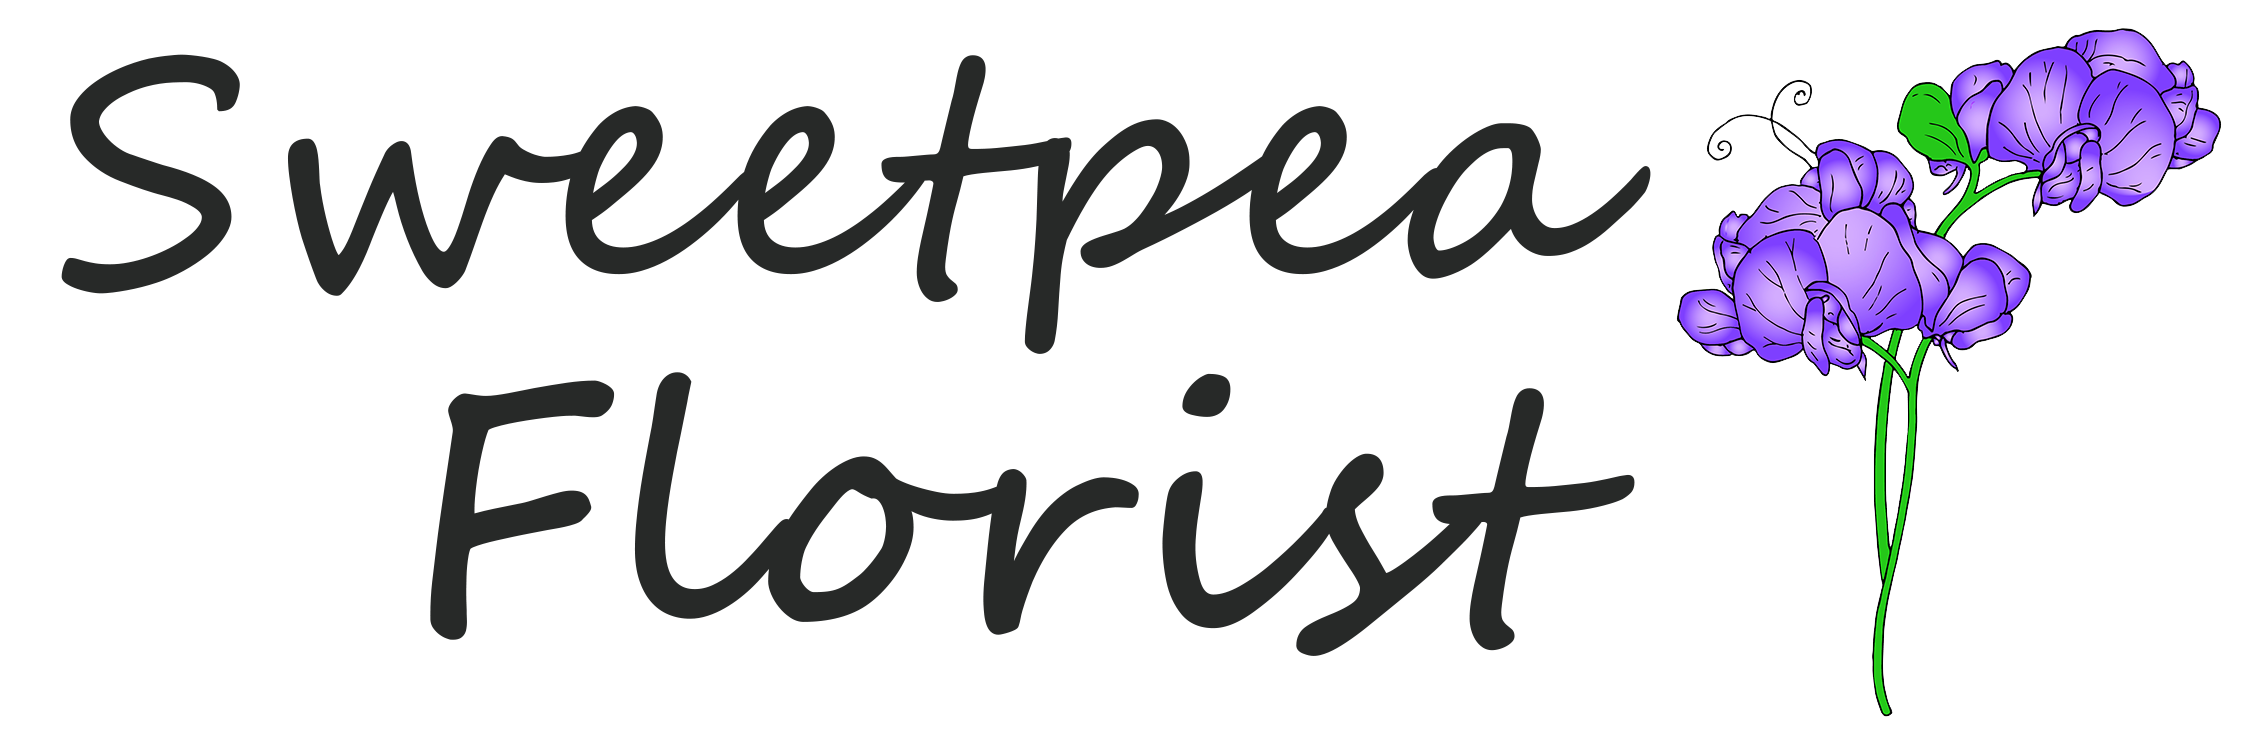 Sweetpea Florist - Logo